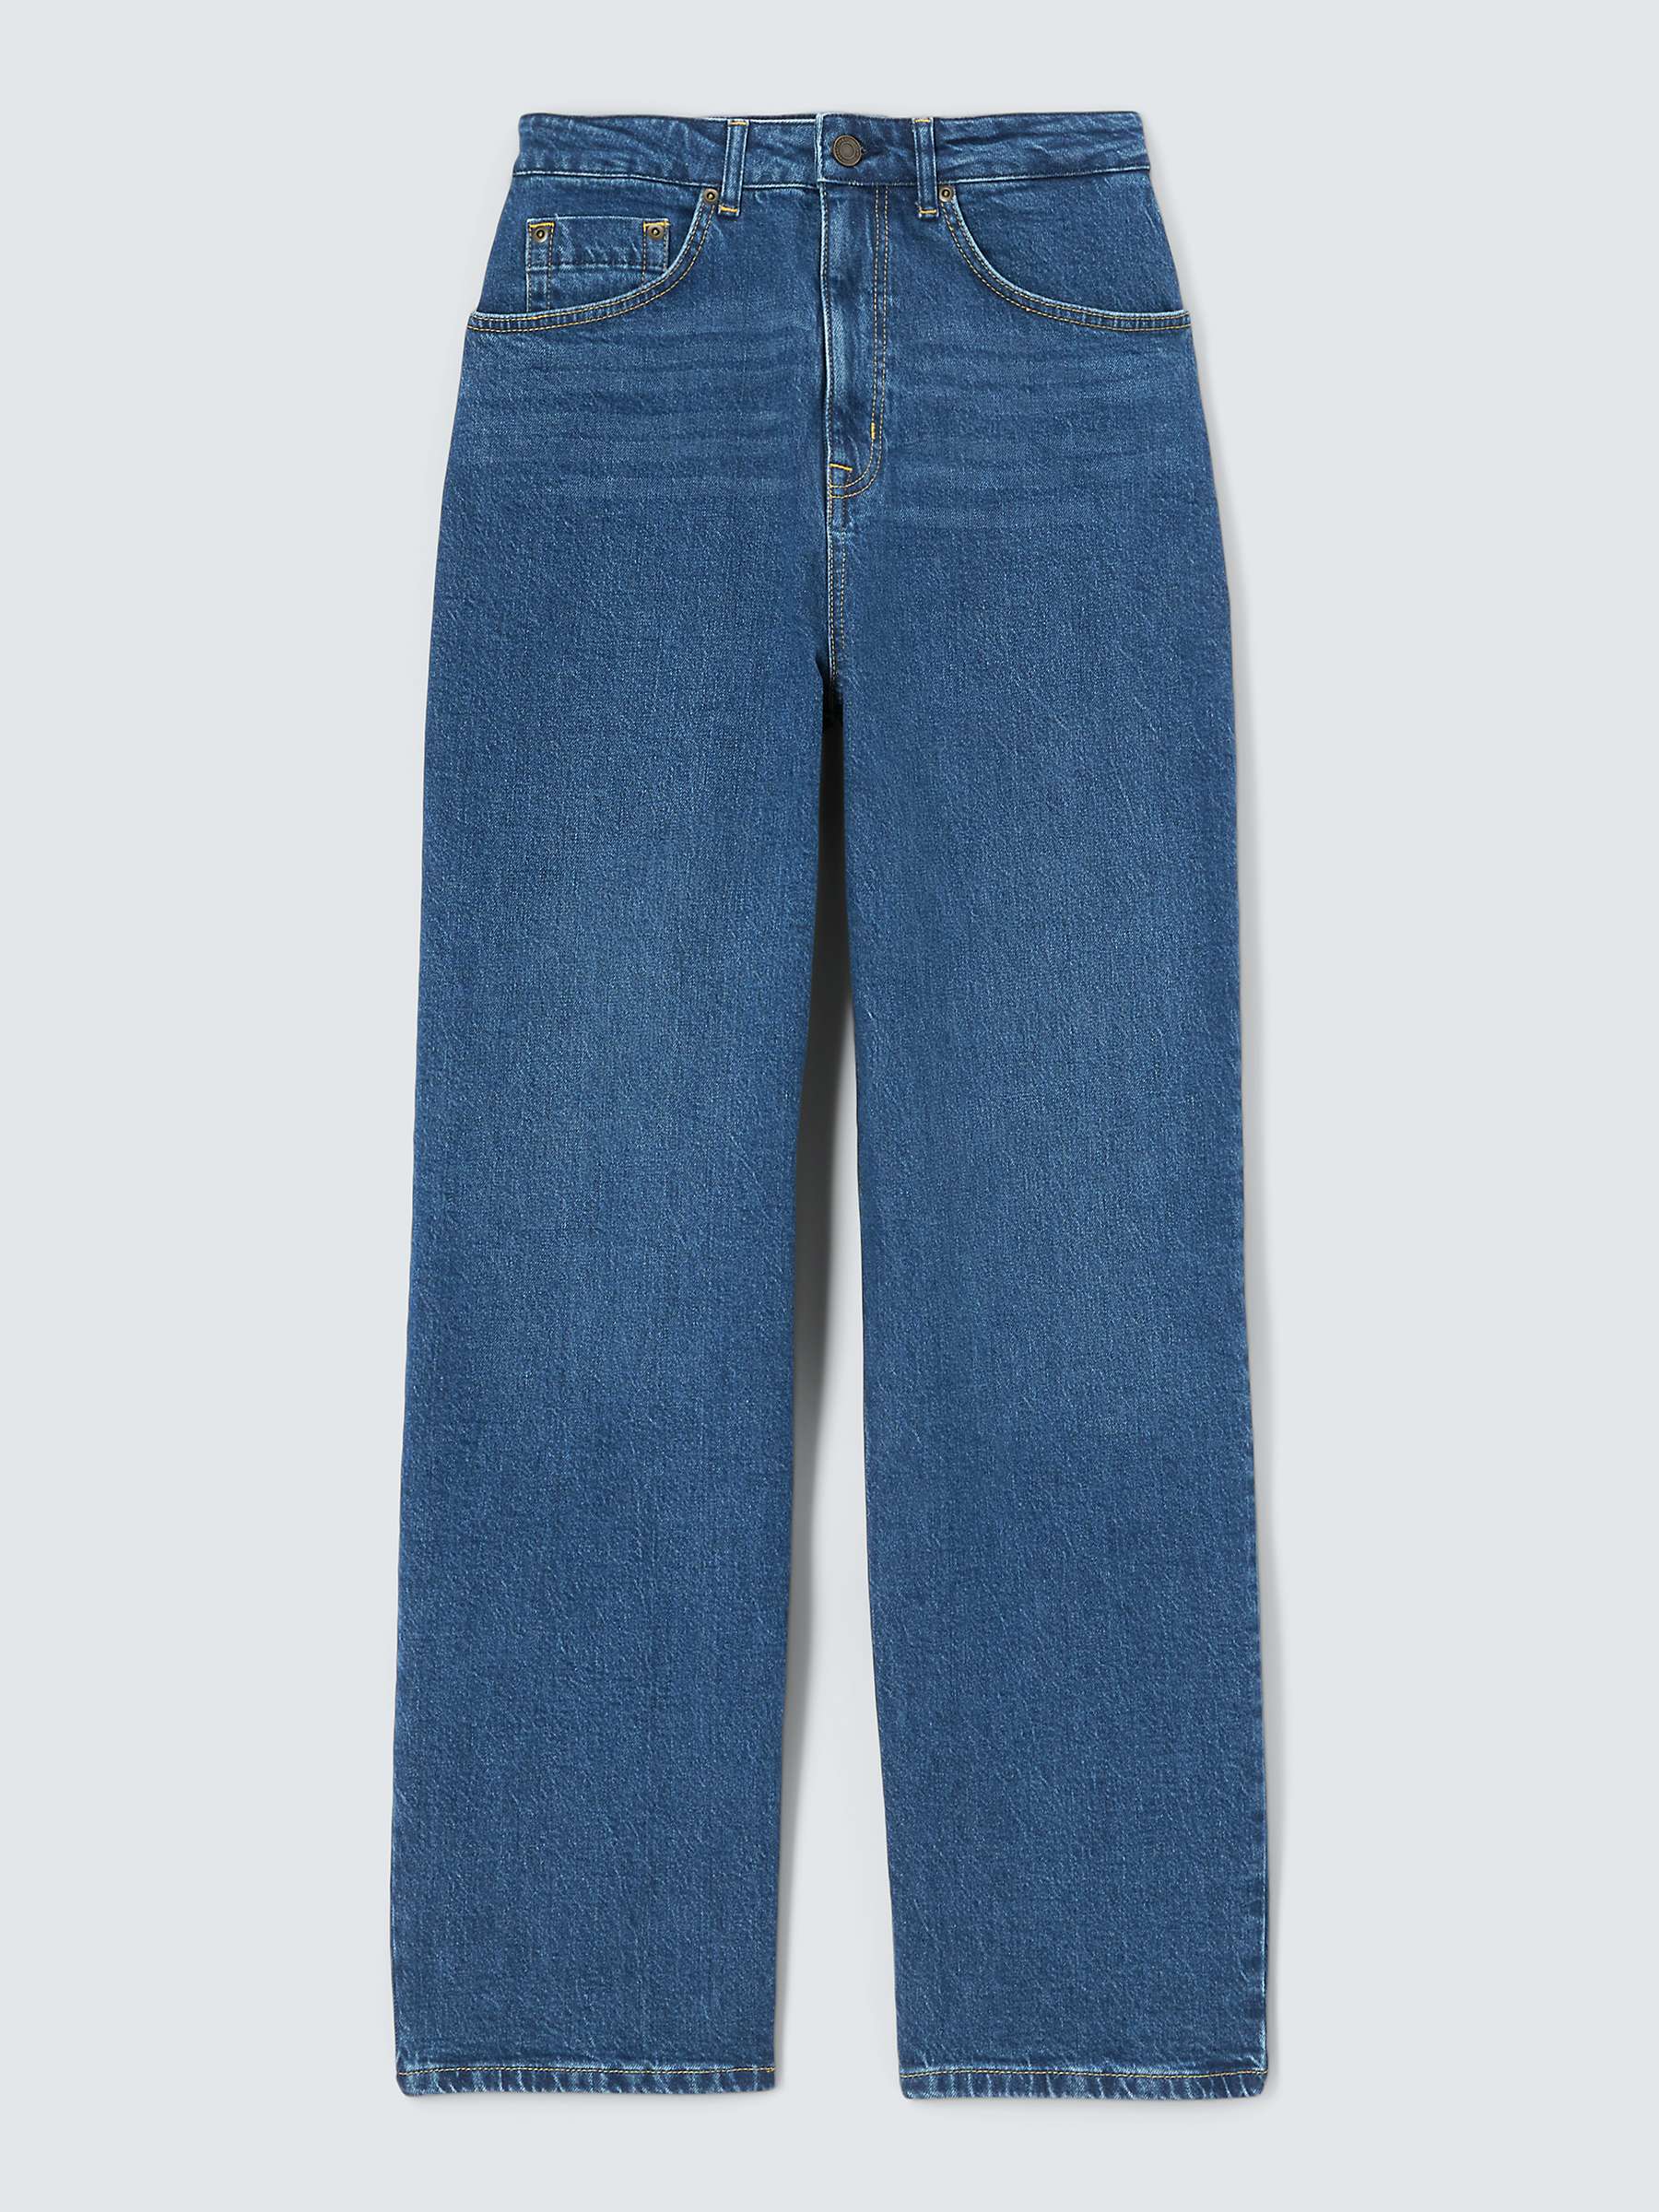 Buy John Lewis Premium Straight Leg Jeans, Mid Wash Online at johnlewis.com